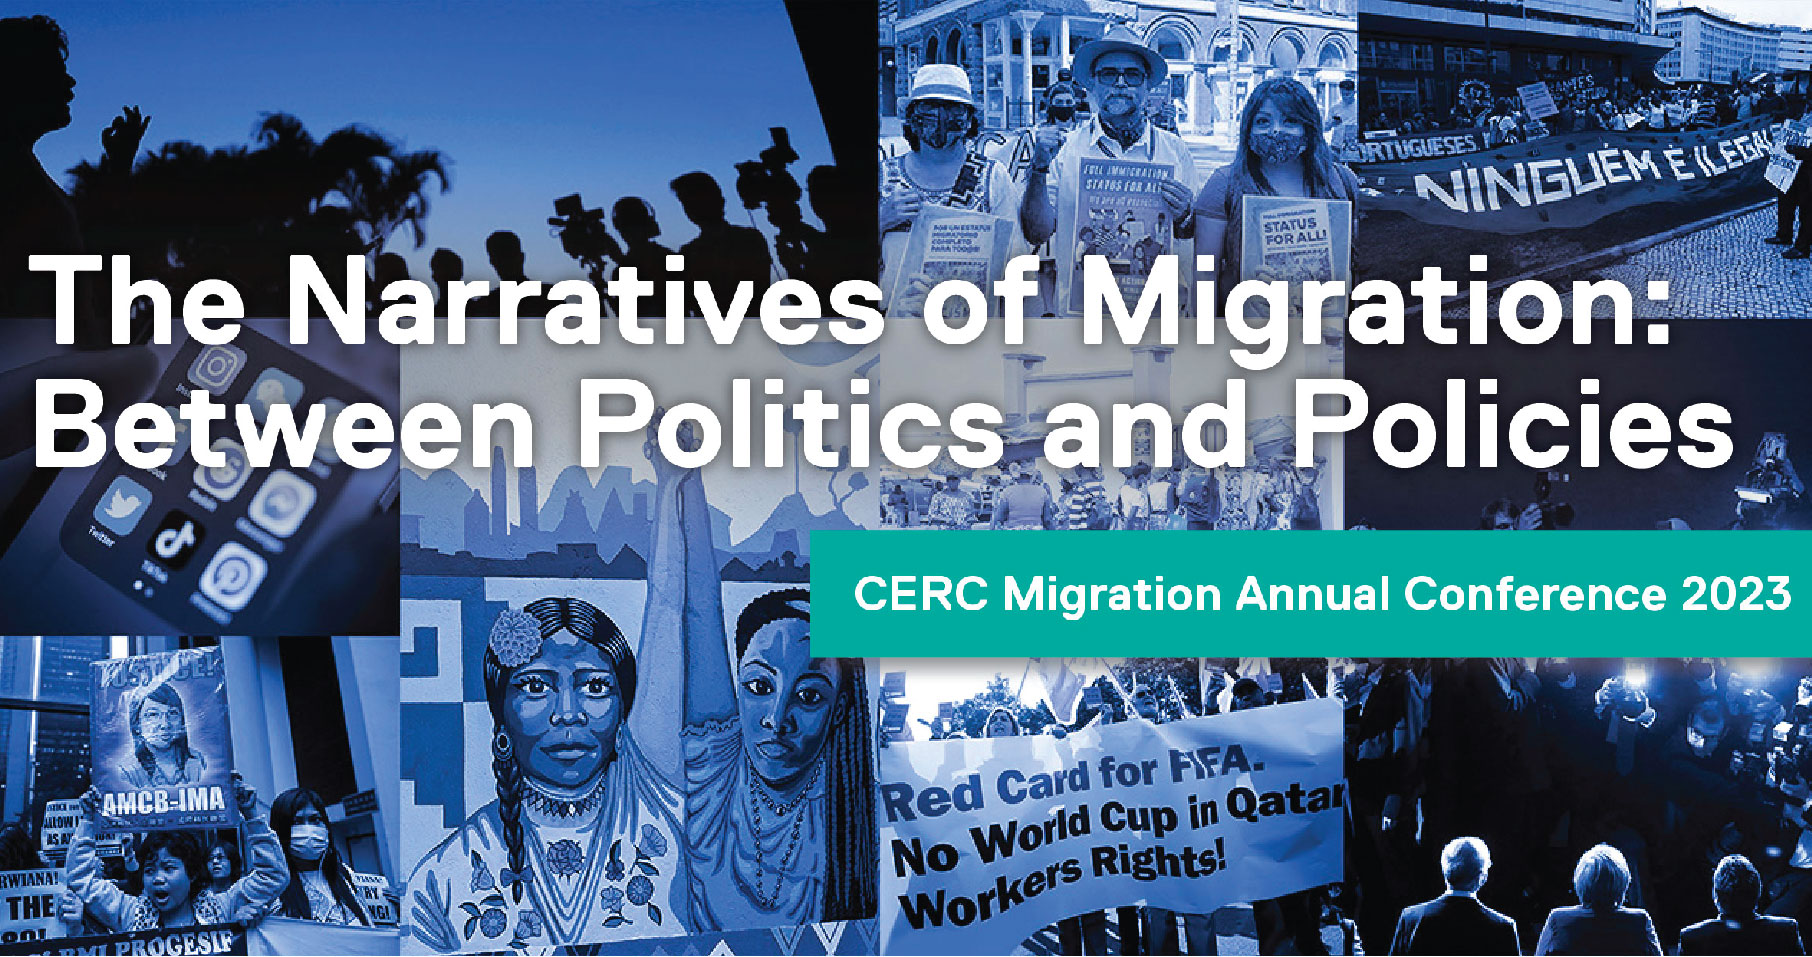 Narratives of Migration conference program cover